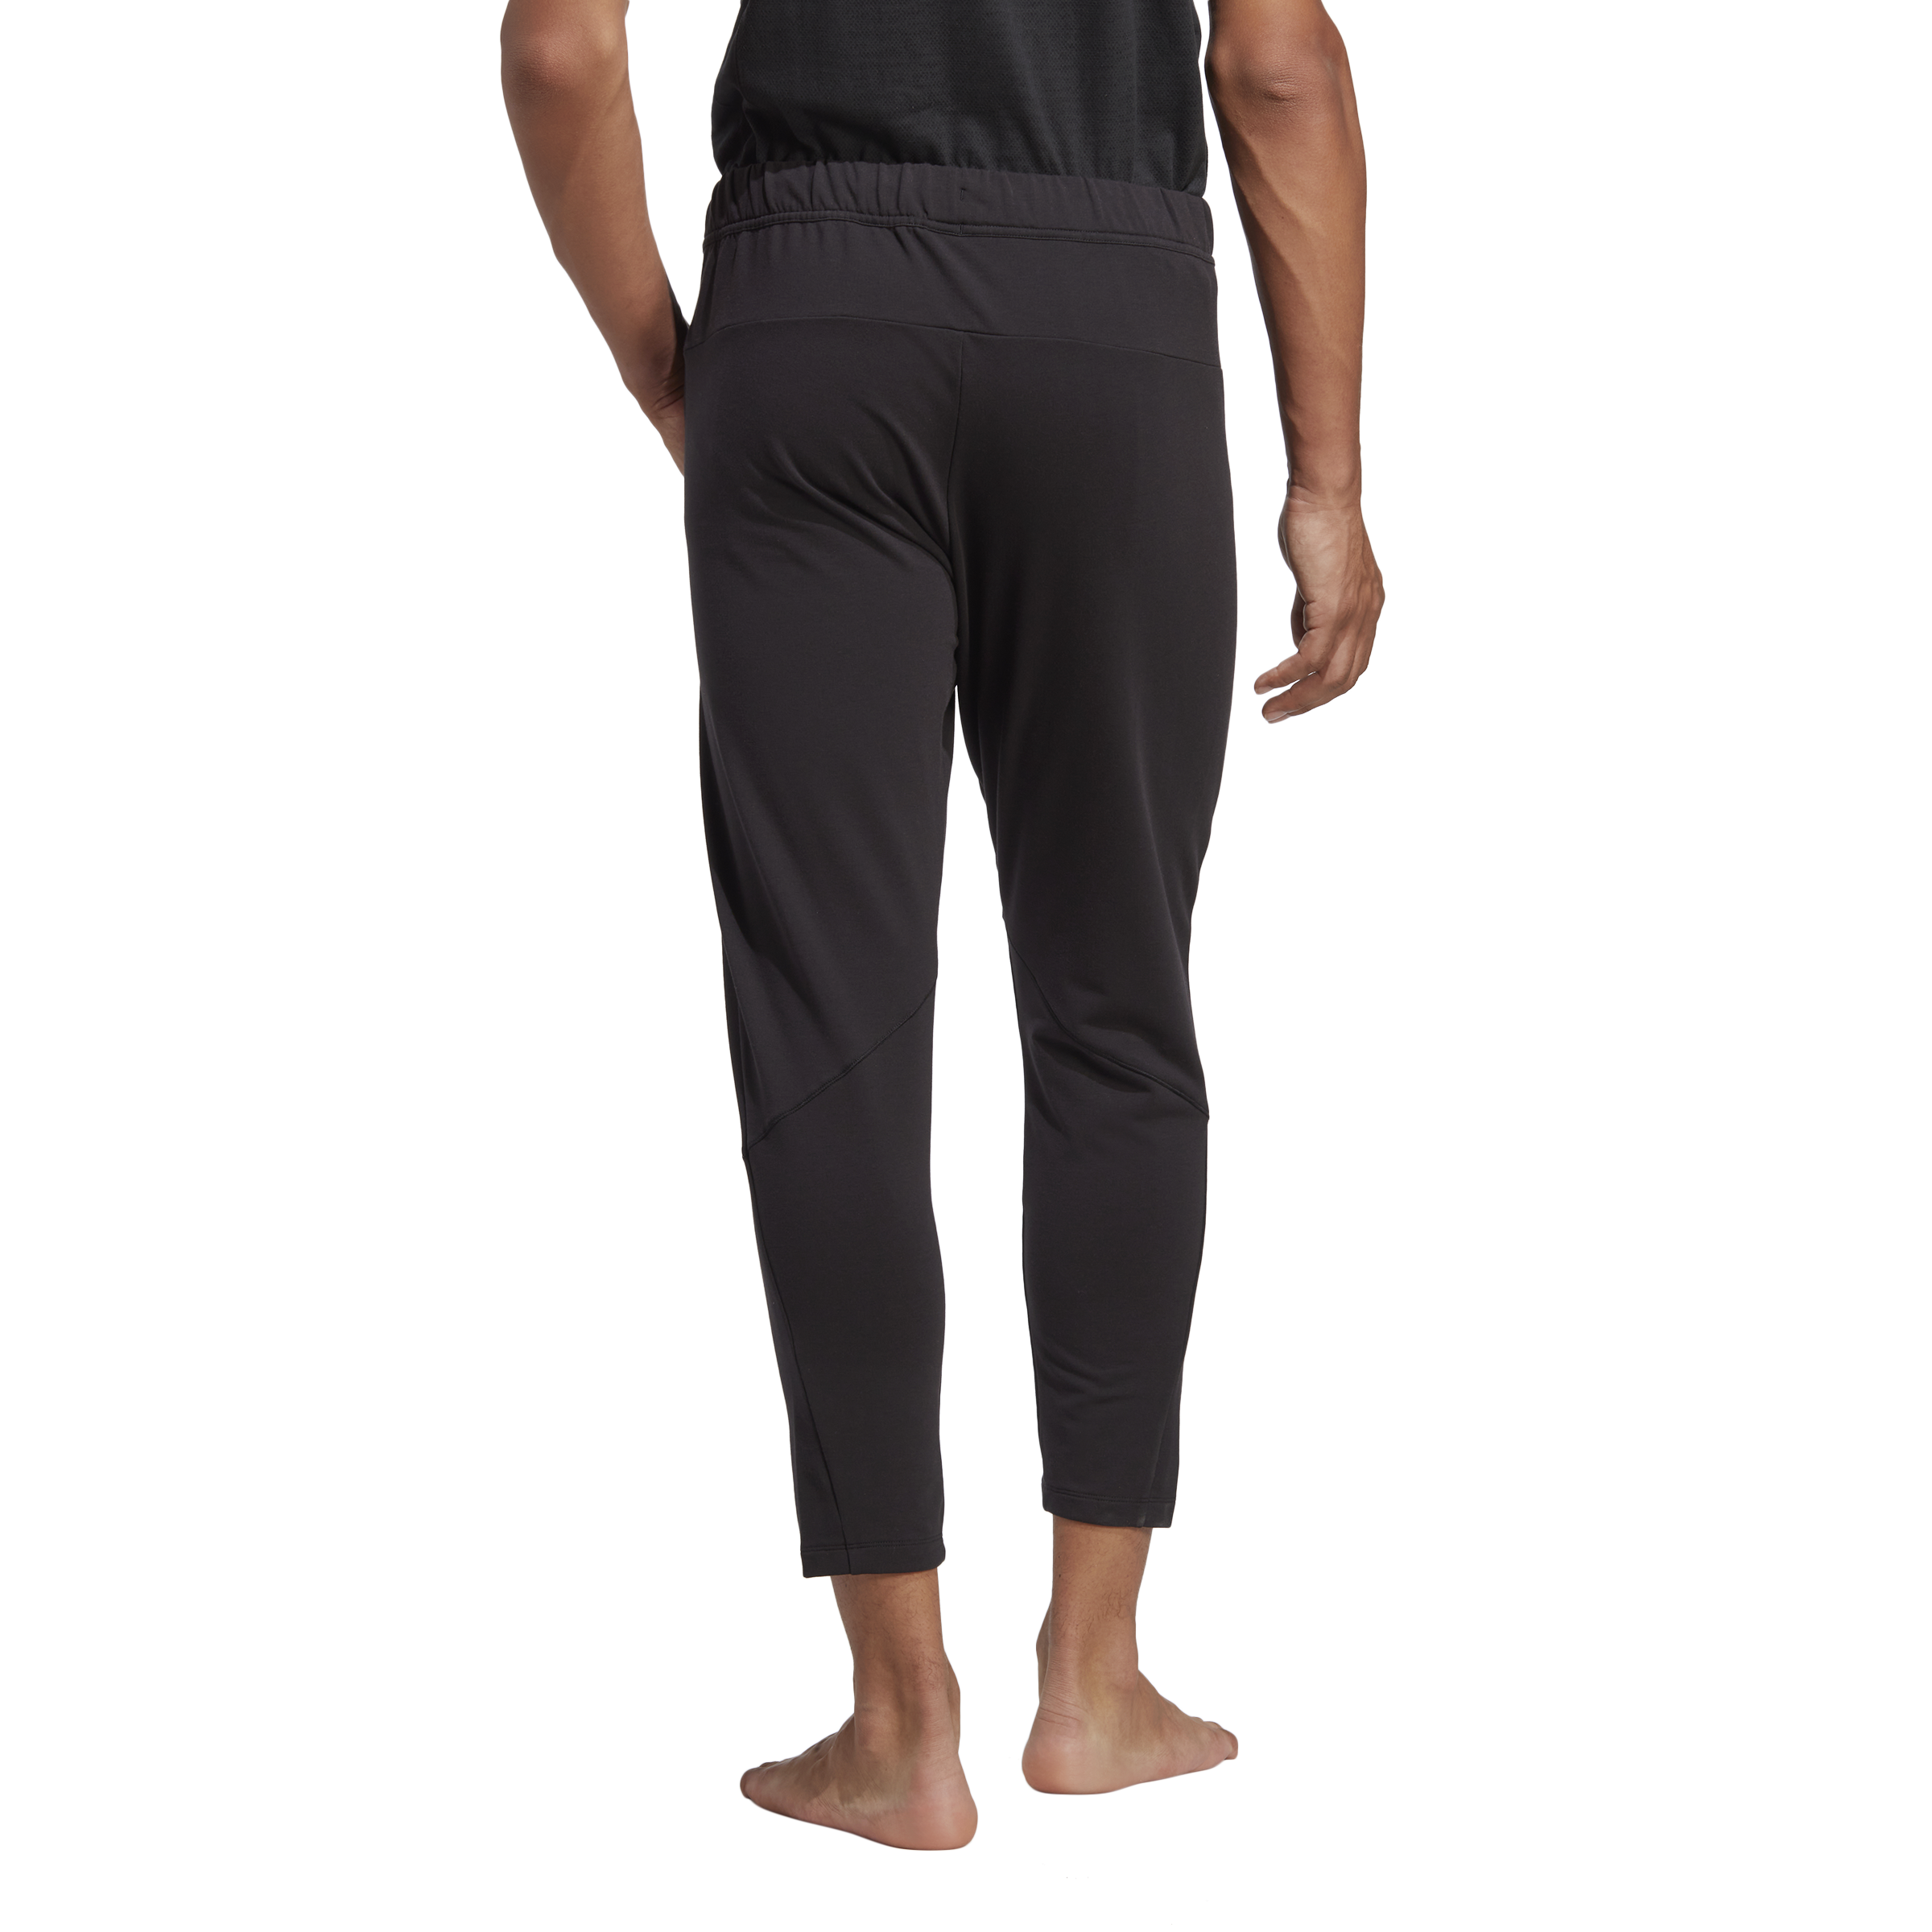 Mens Designed For Training Yoga 7/8 Training Pant